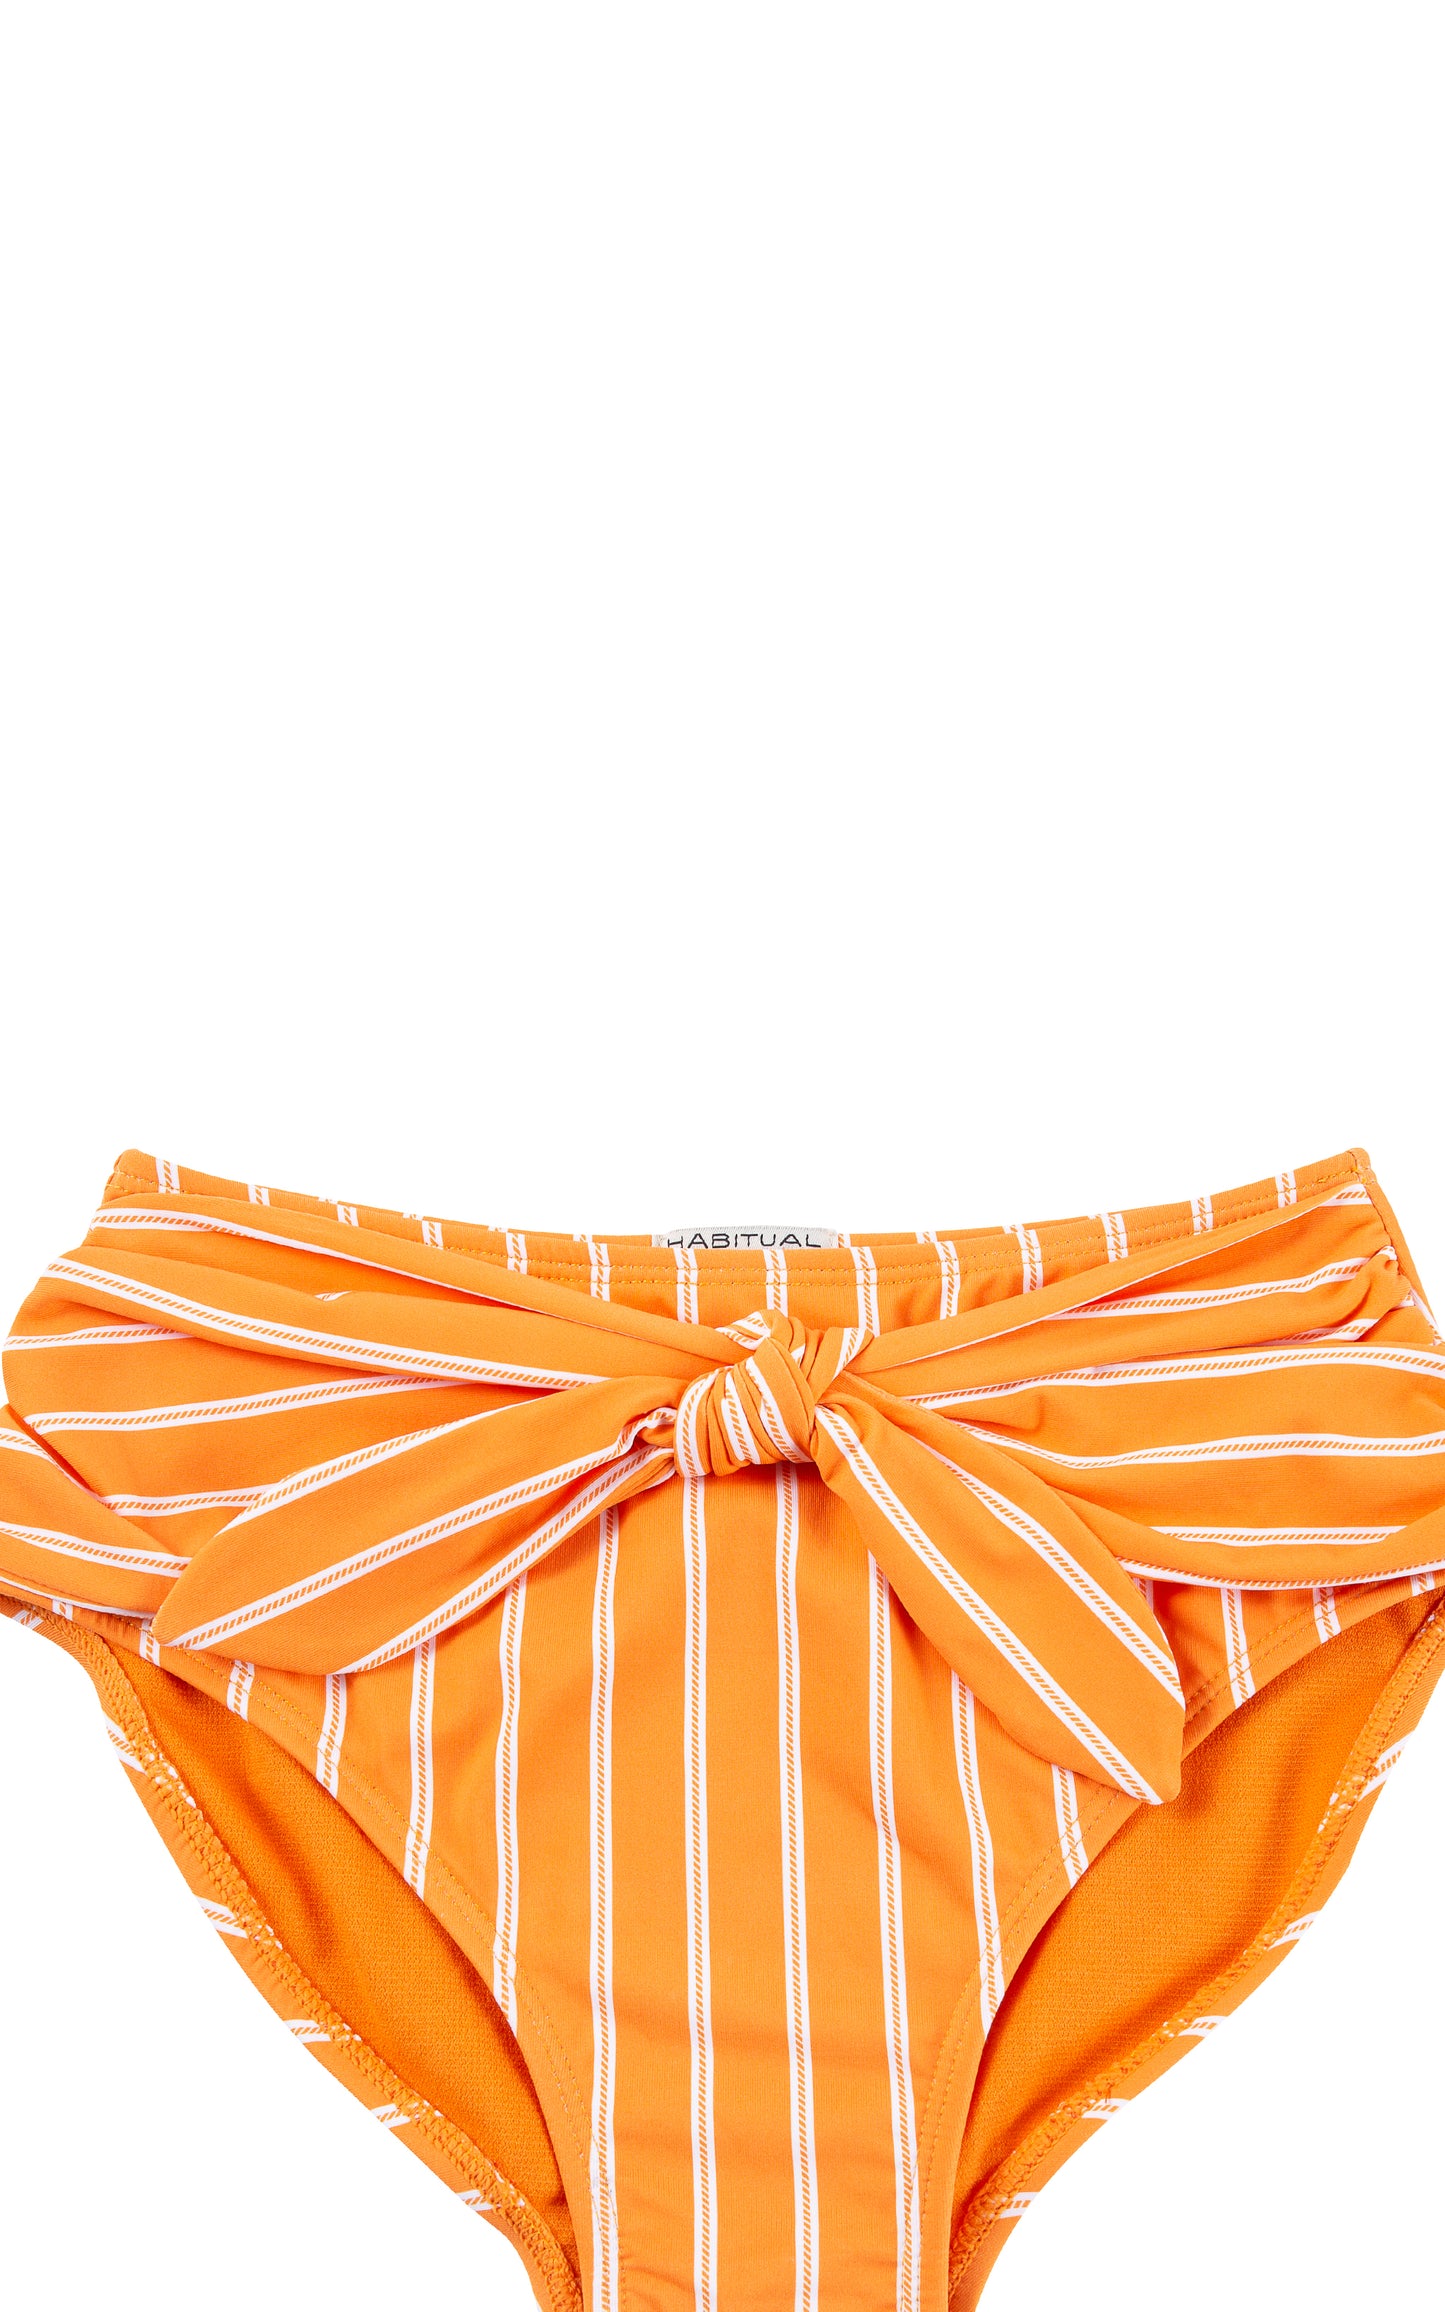 Close up of orange bottom with white stripes